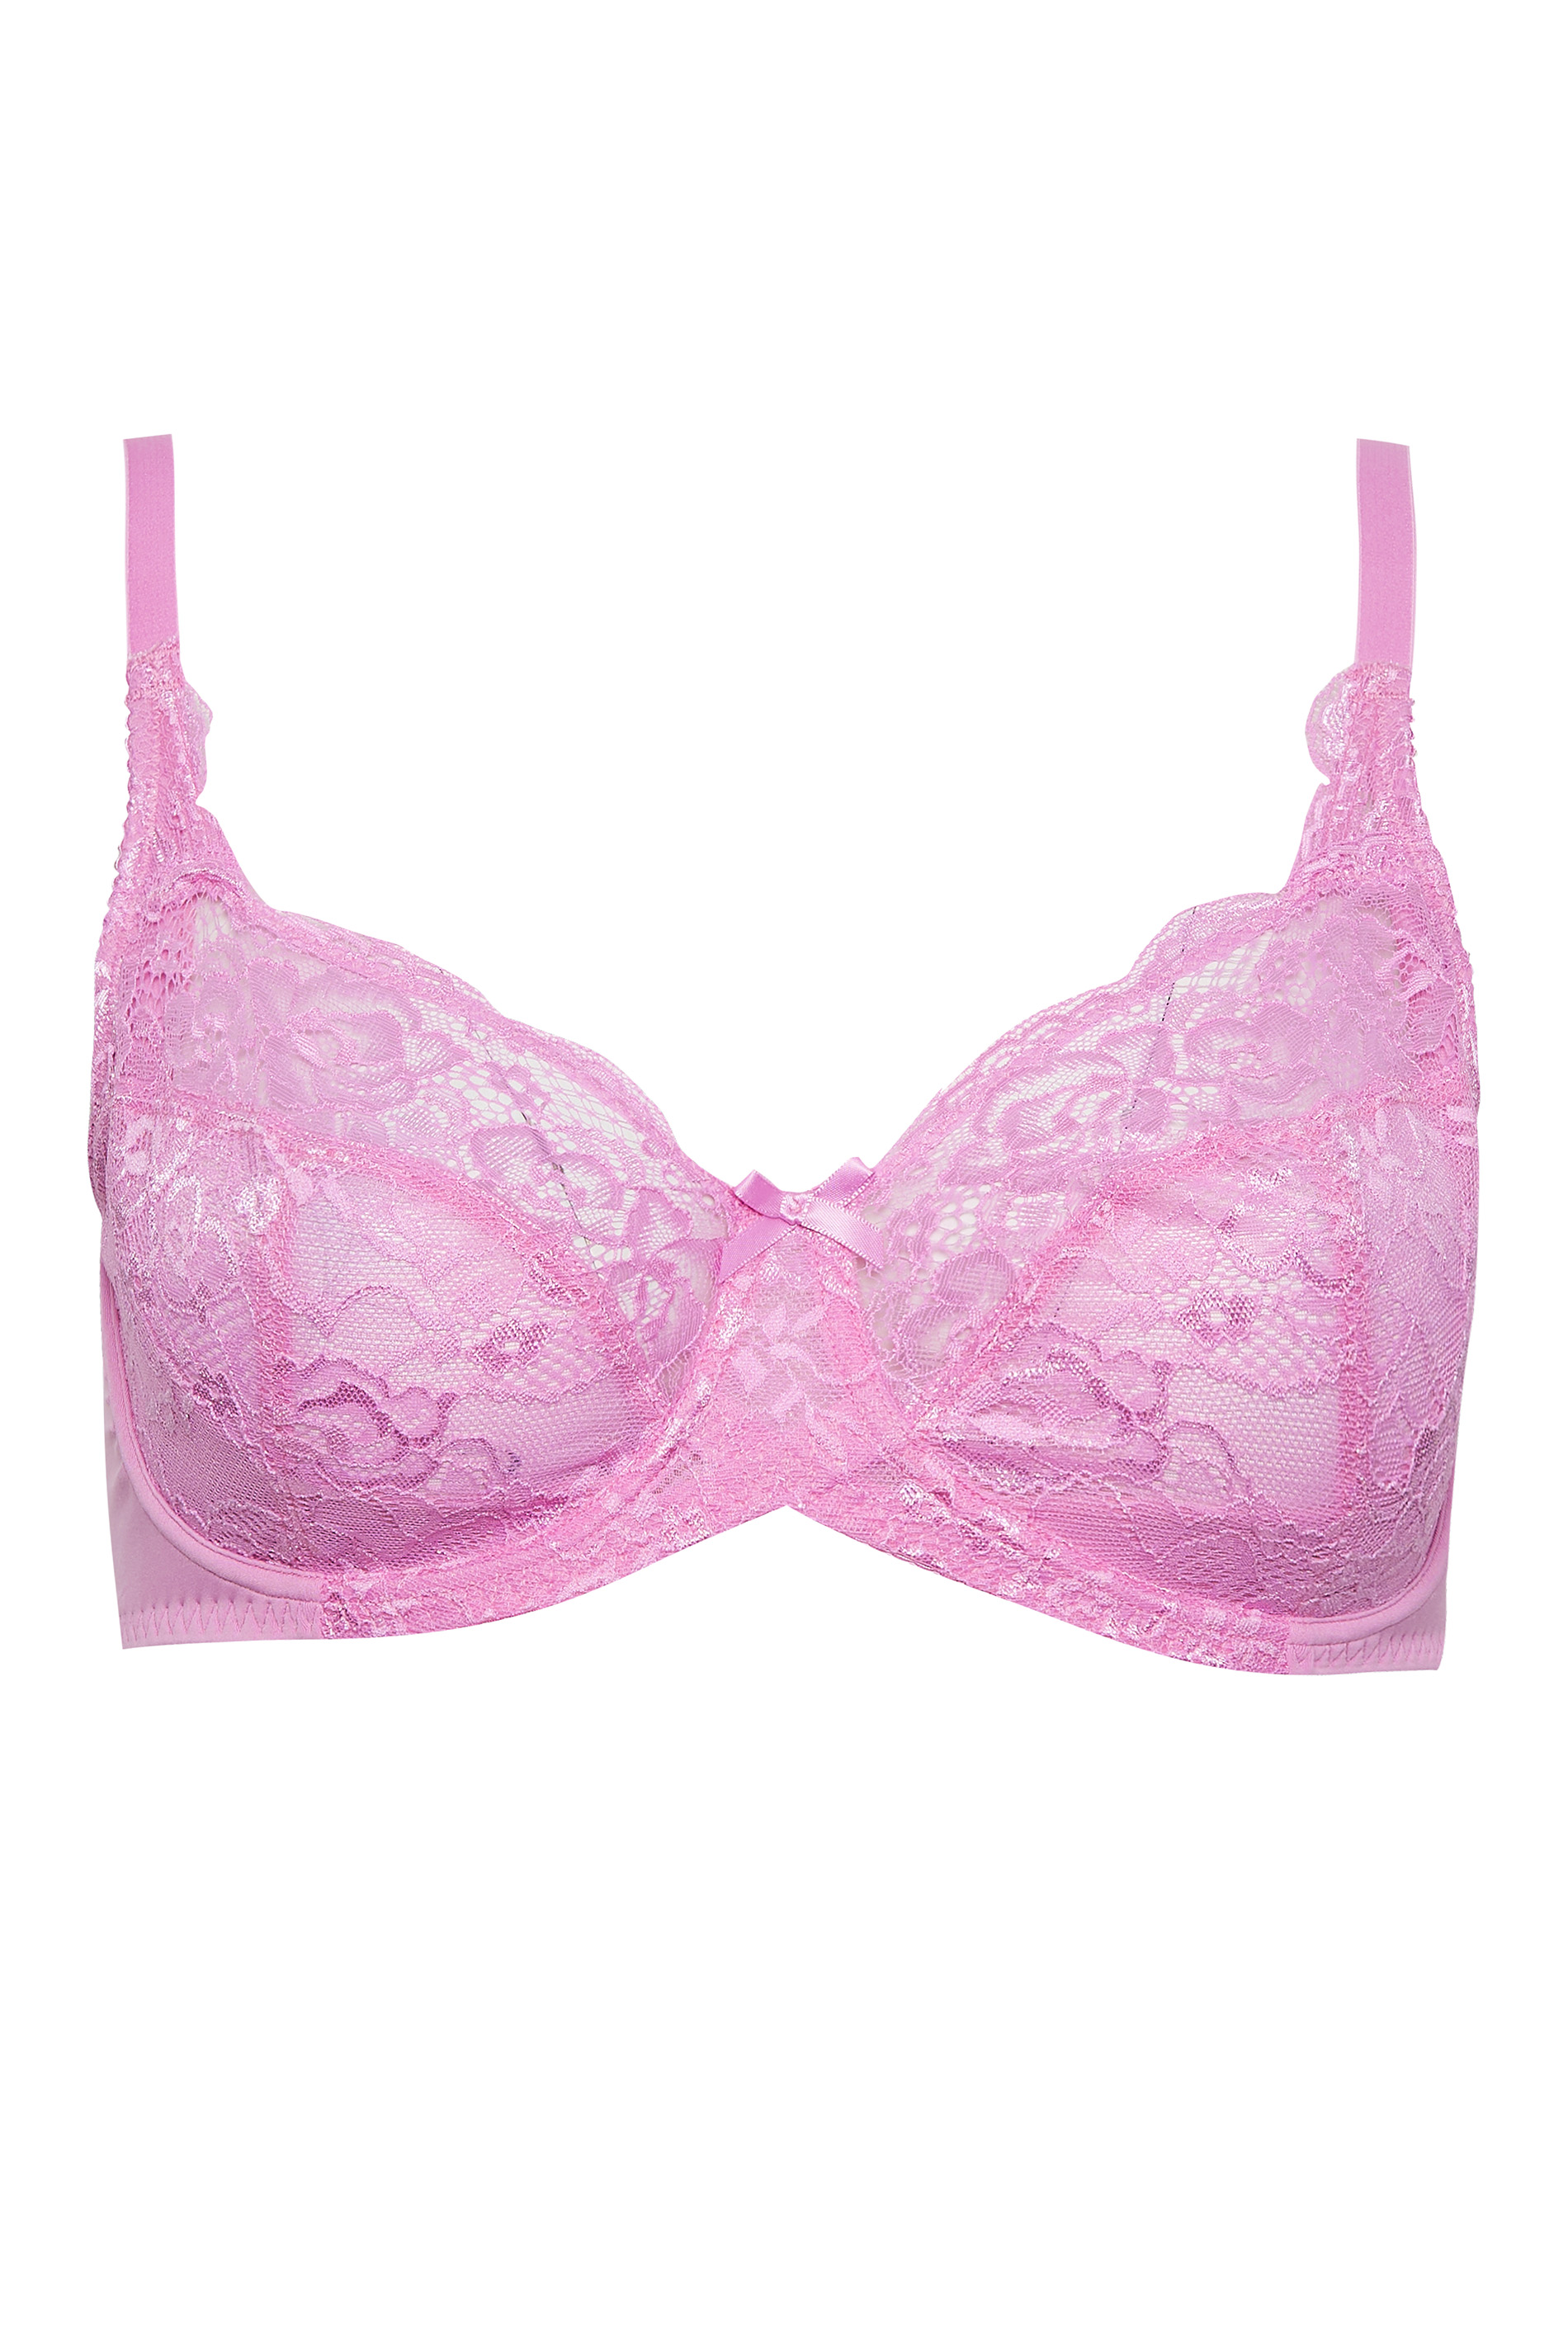 La Senza pale pink Lace Underwire lightly Padded So Free Bra Size